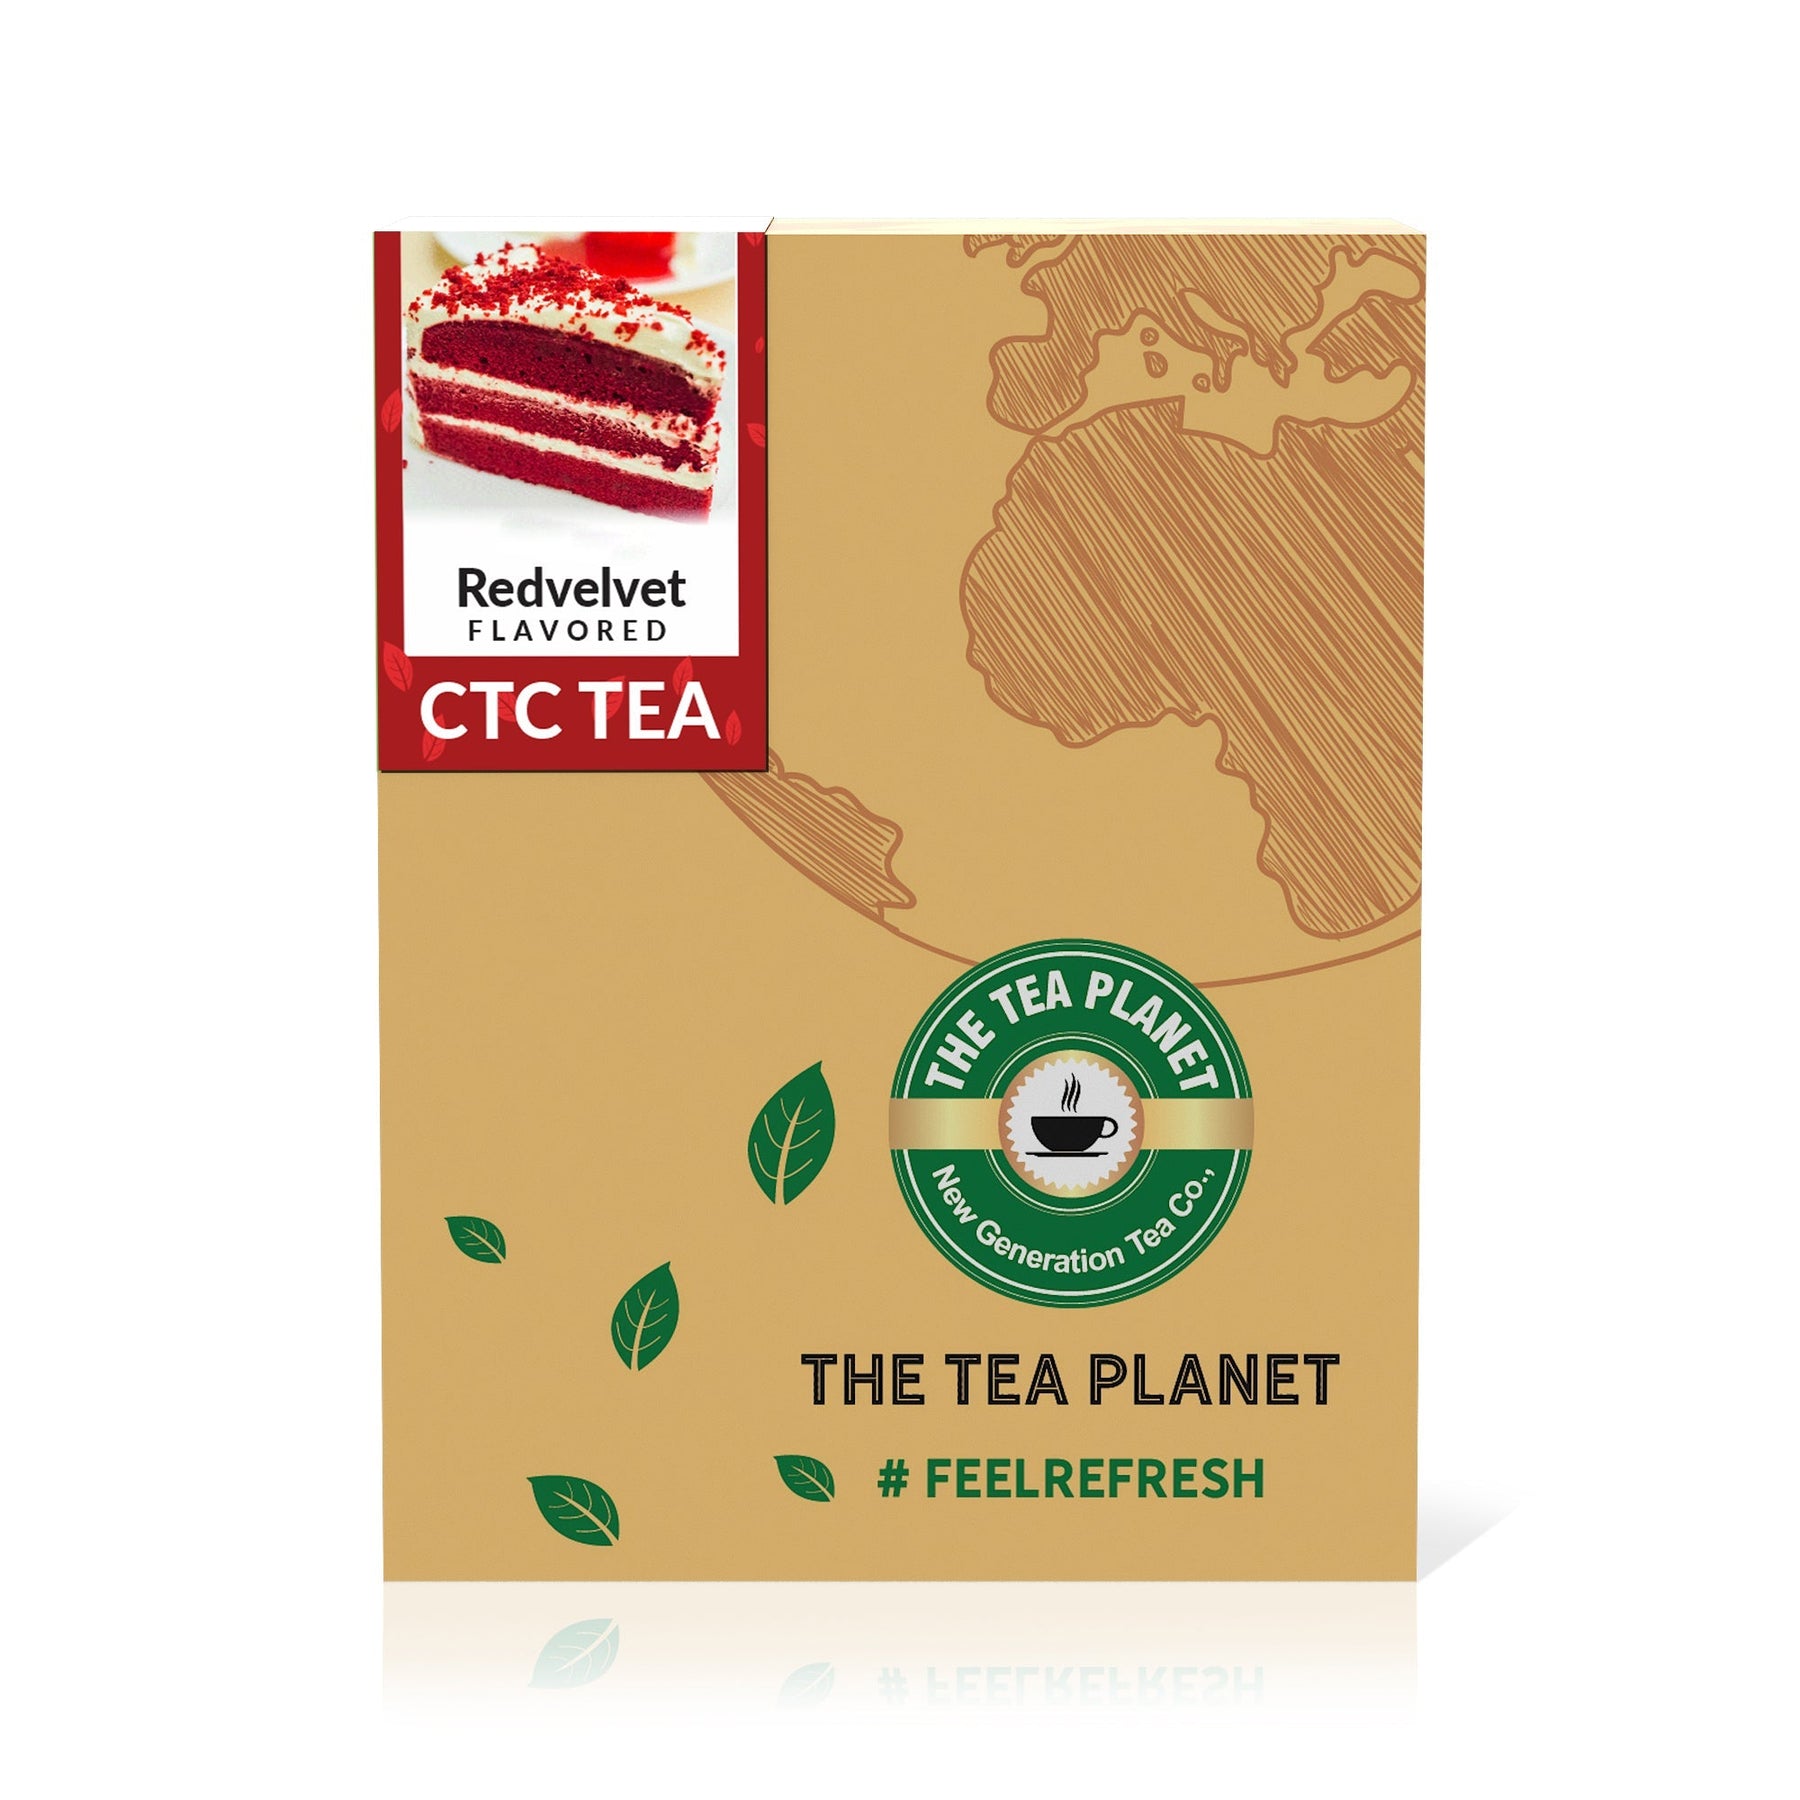 Redvelvet Flavored CTC Tea 1